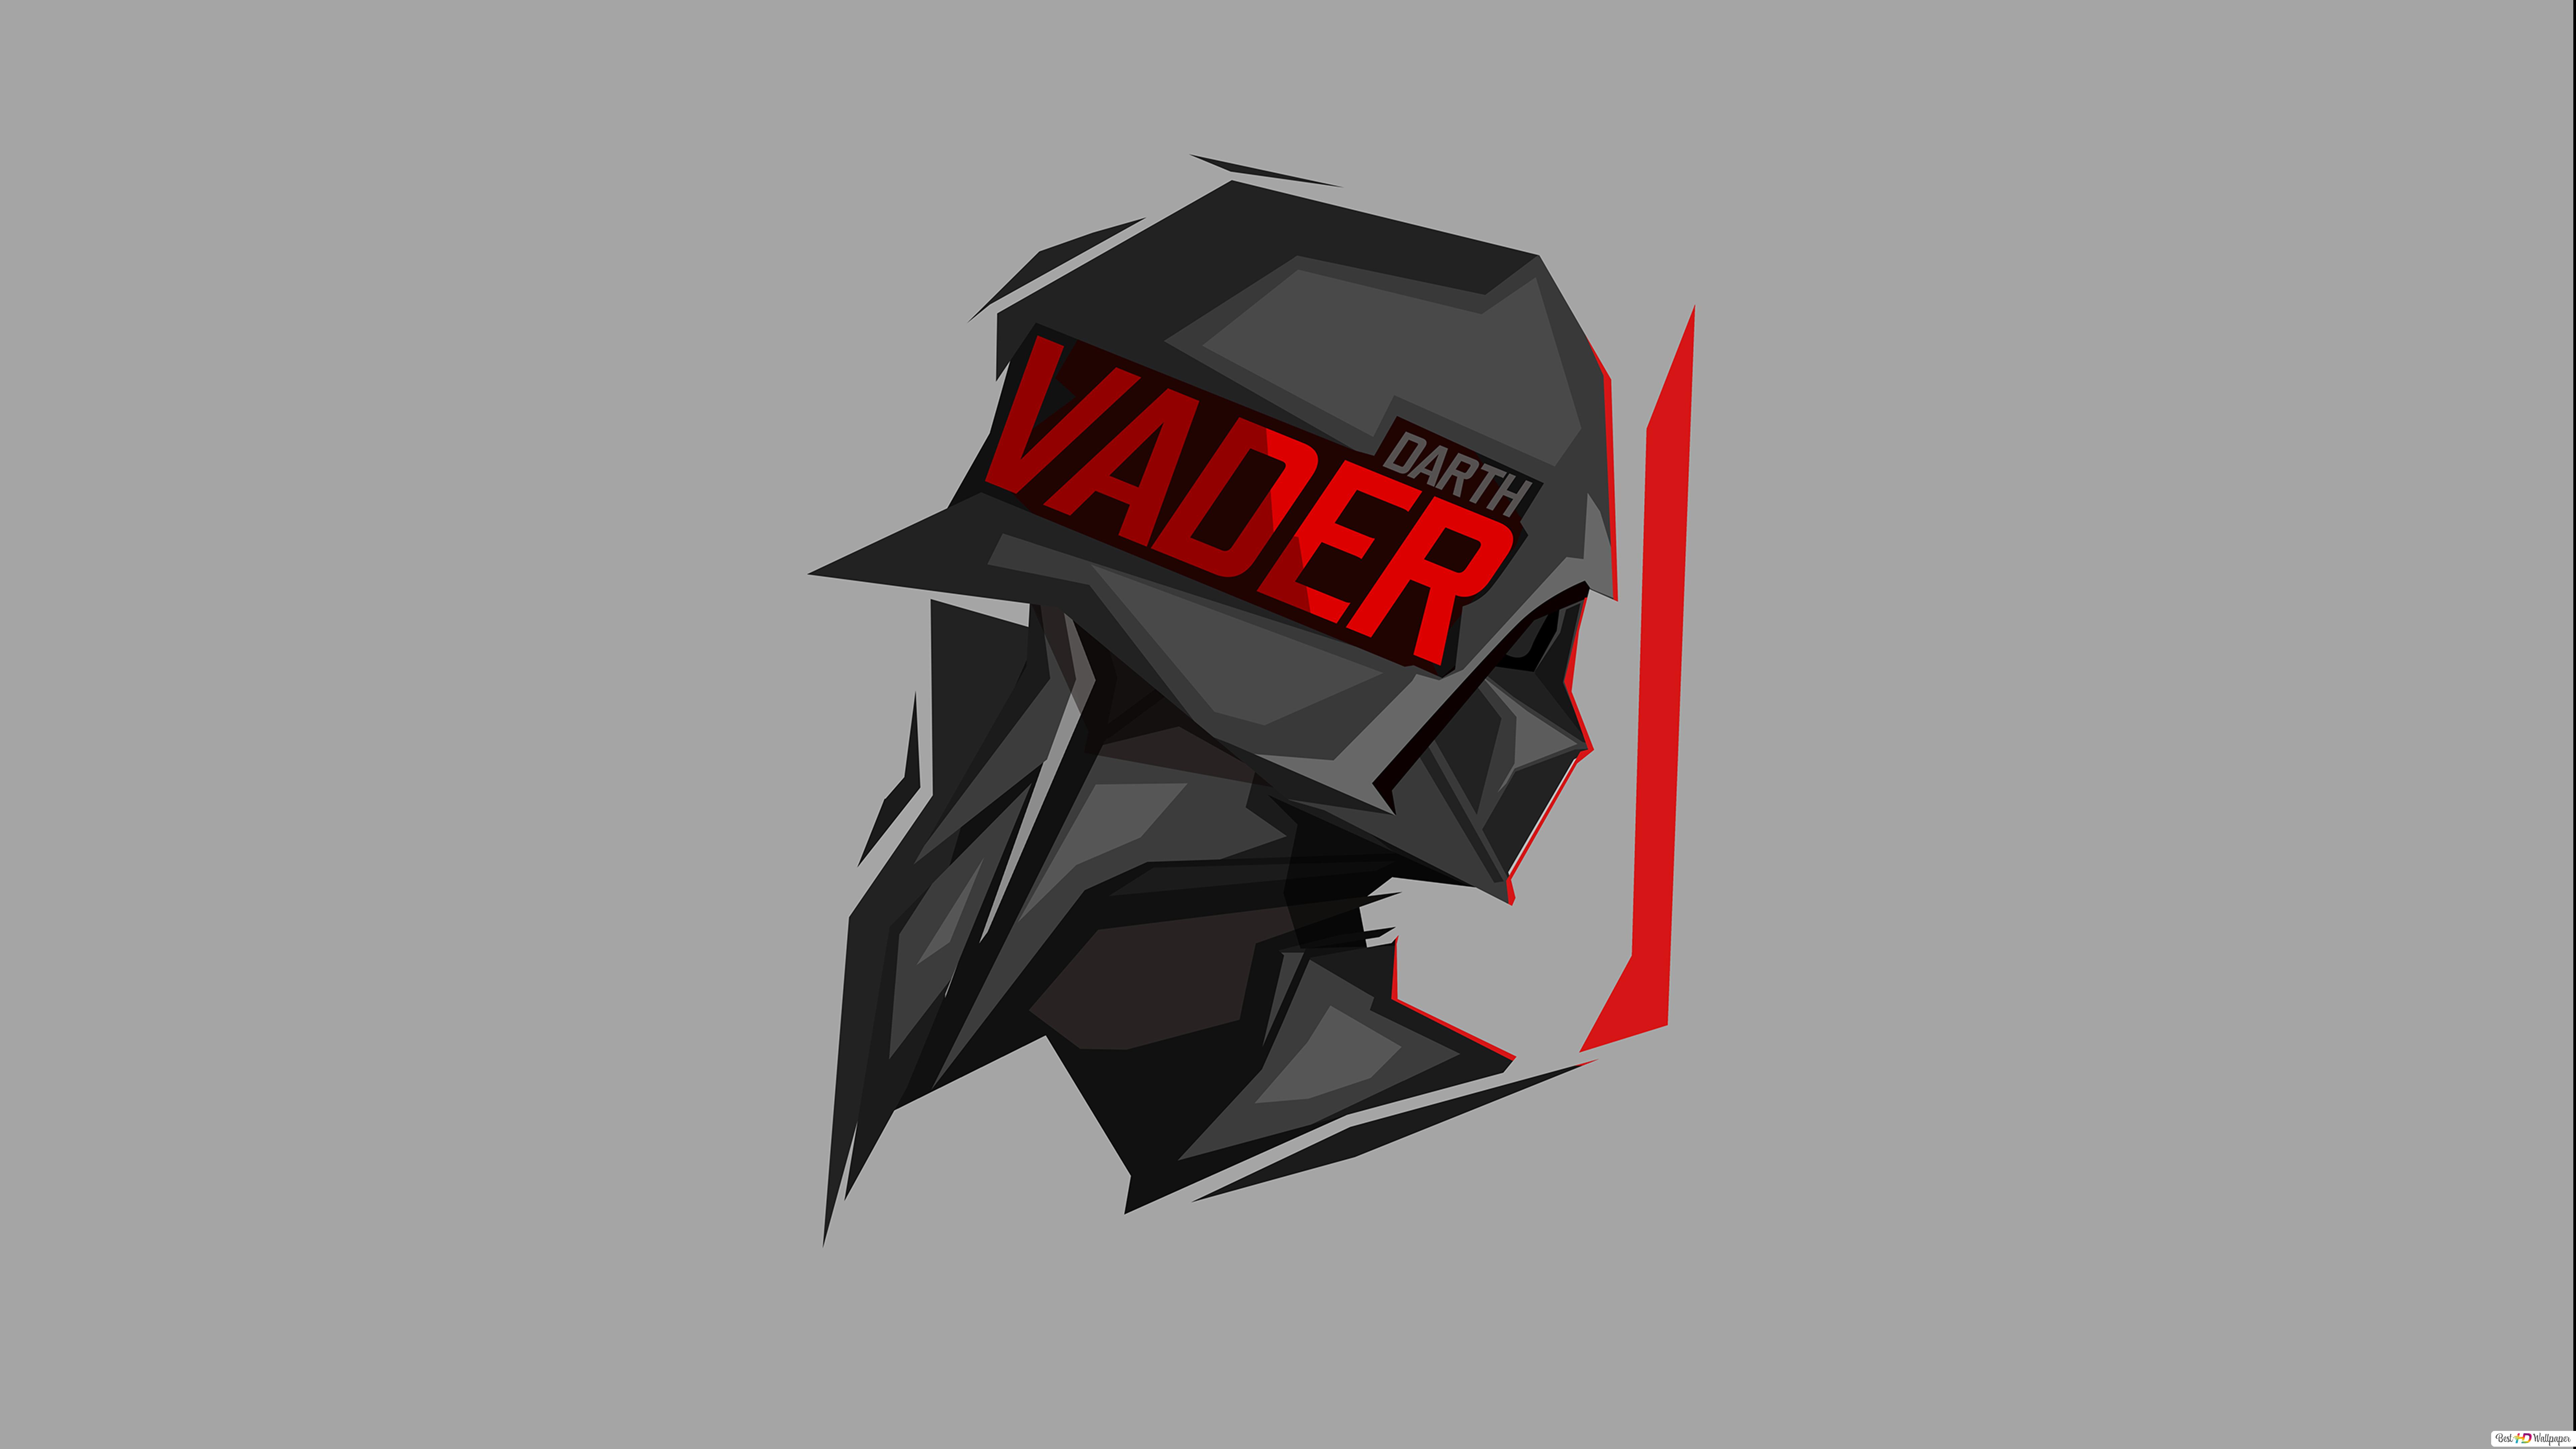 Star Wars Darth Vader Minimalist in gray wallpaper background HD wallpaper download